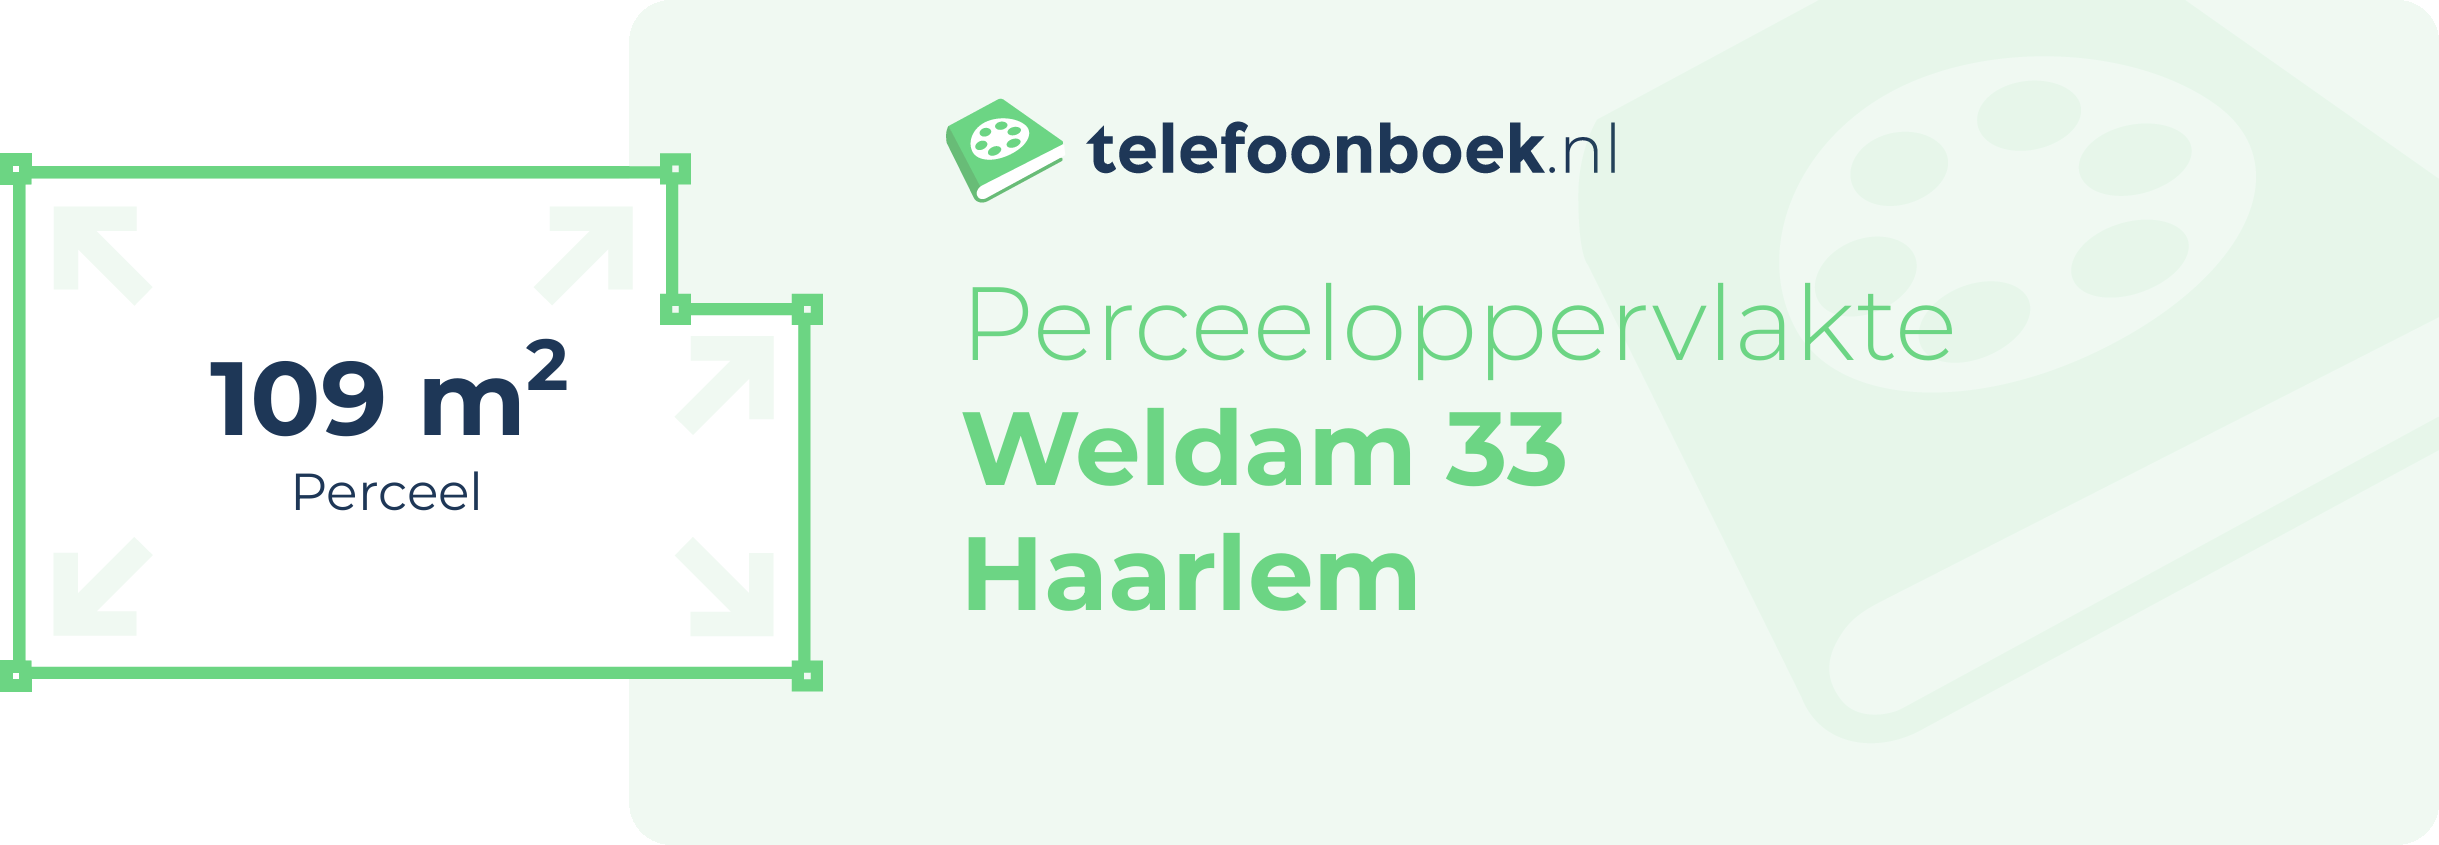 Perceeloppervlakte Weldam 33 Haarlem